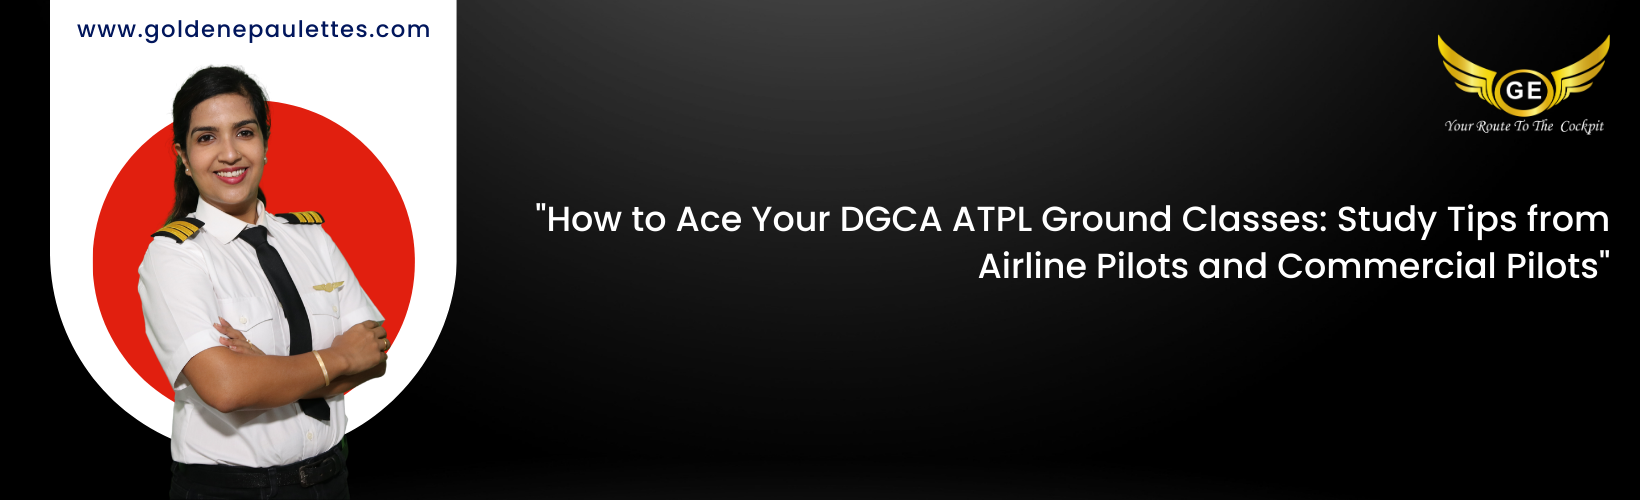 Online Resources for DGCA ATPL Ground Classes